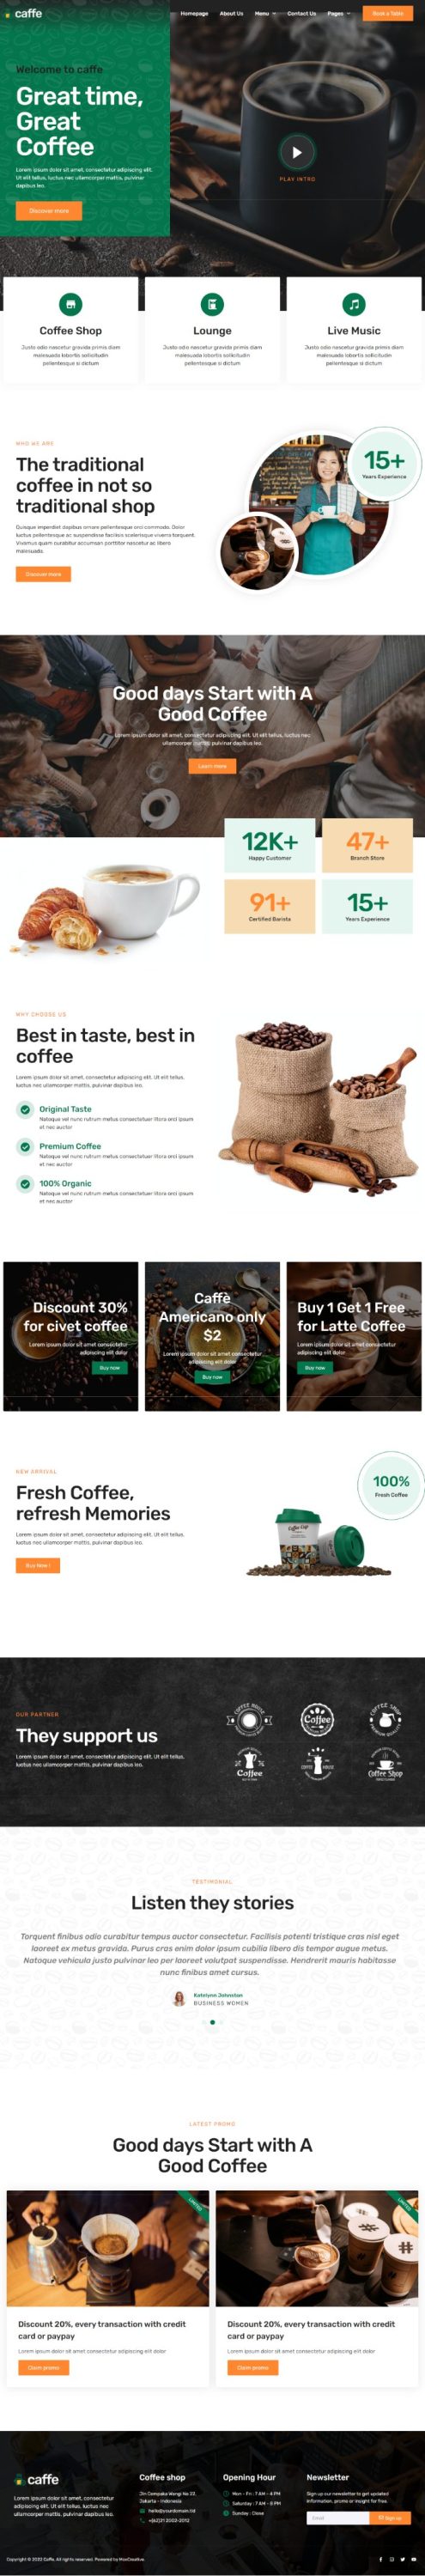 Mẫu website cafe - Pour café